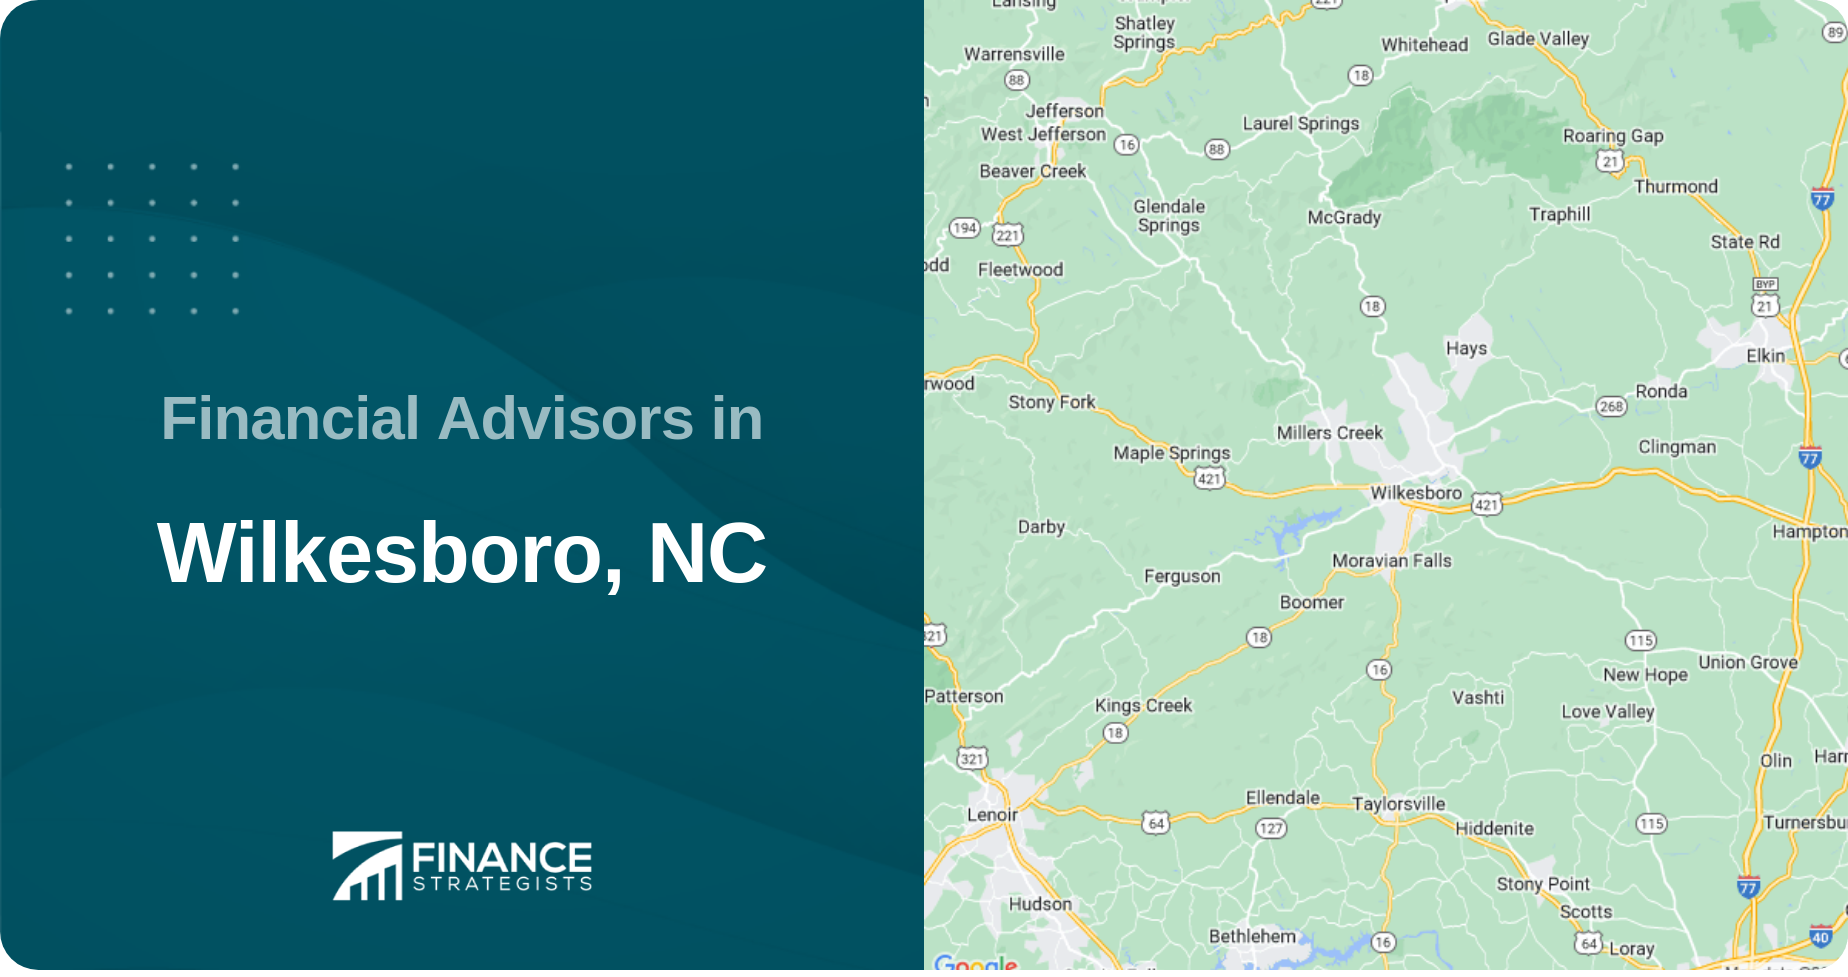 Financial Advisors in Wilkesboro, NC